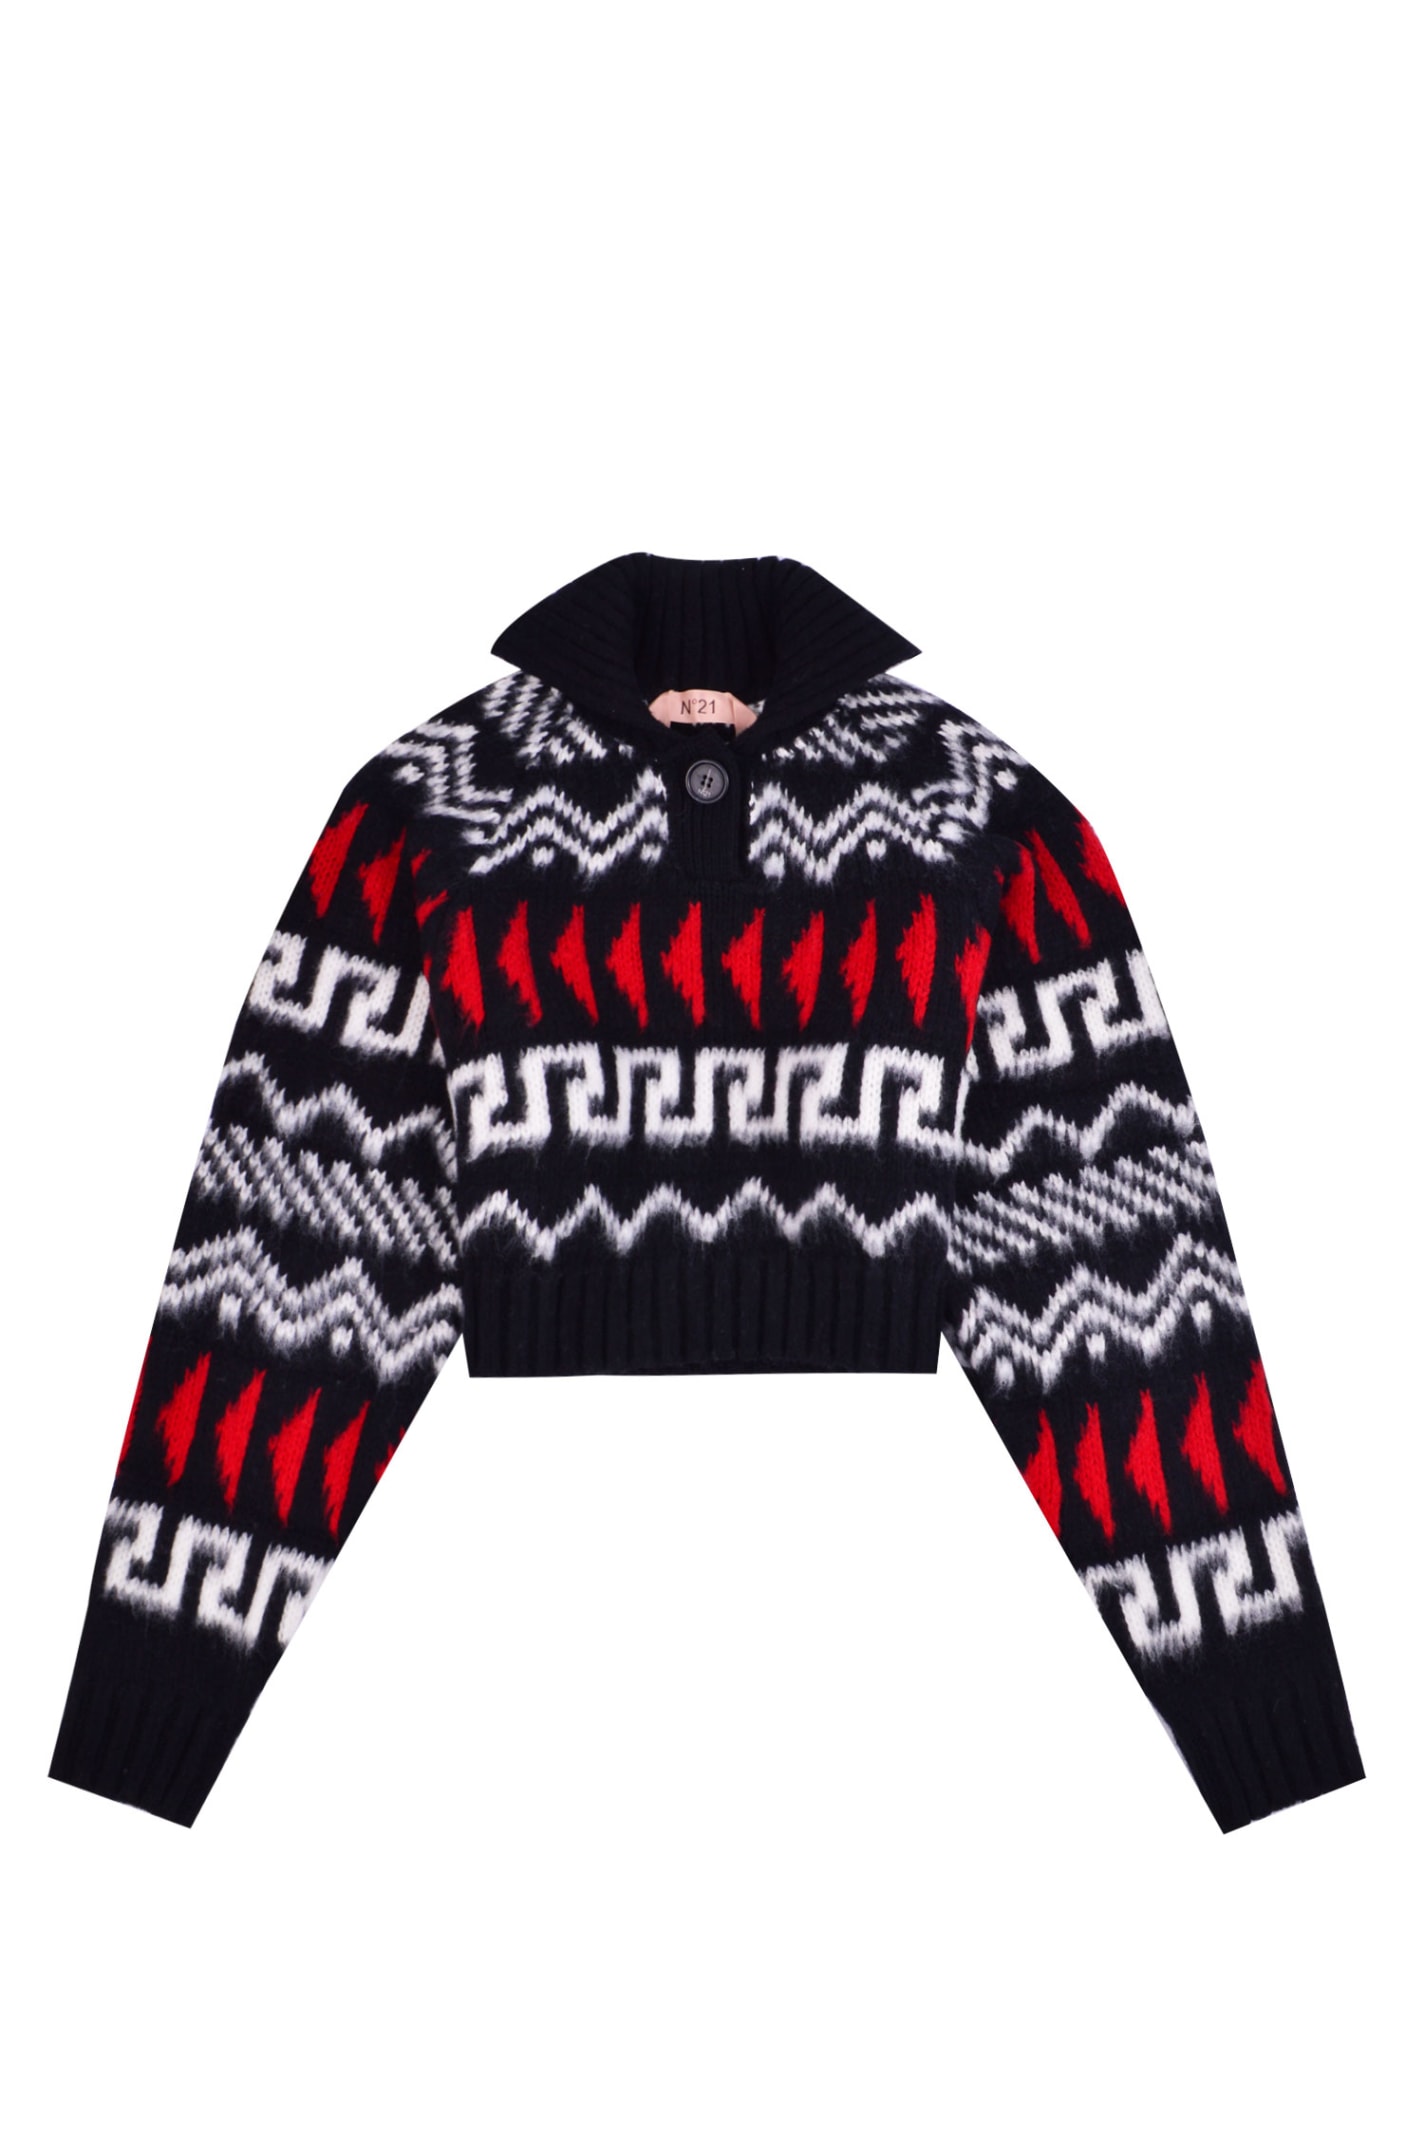 N°21 Cropped Jacquard Sweater In Multi